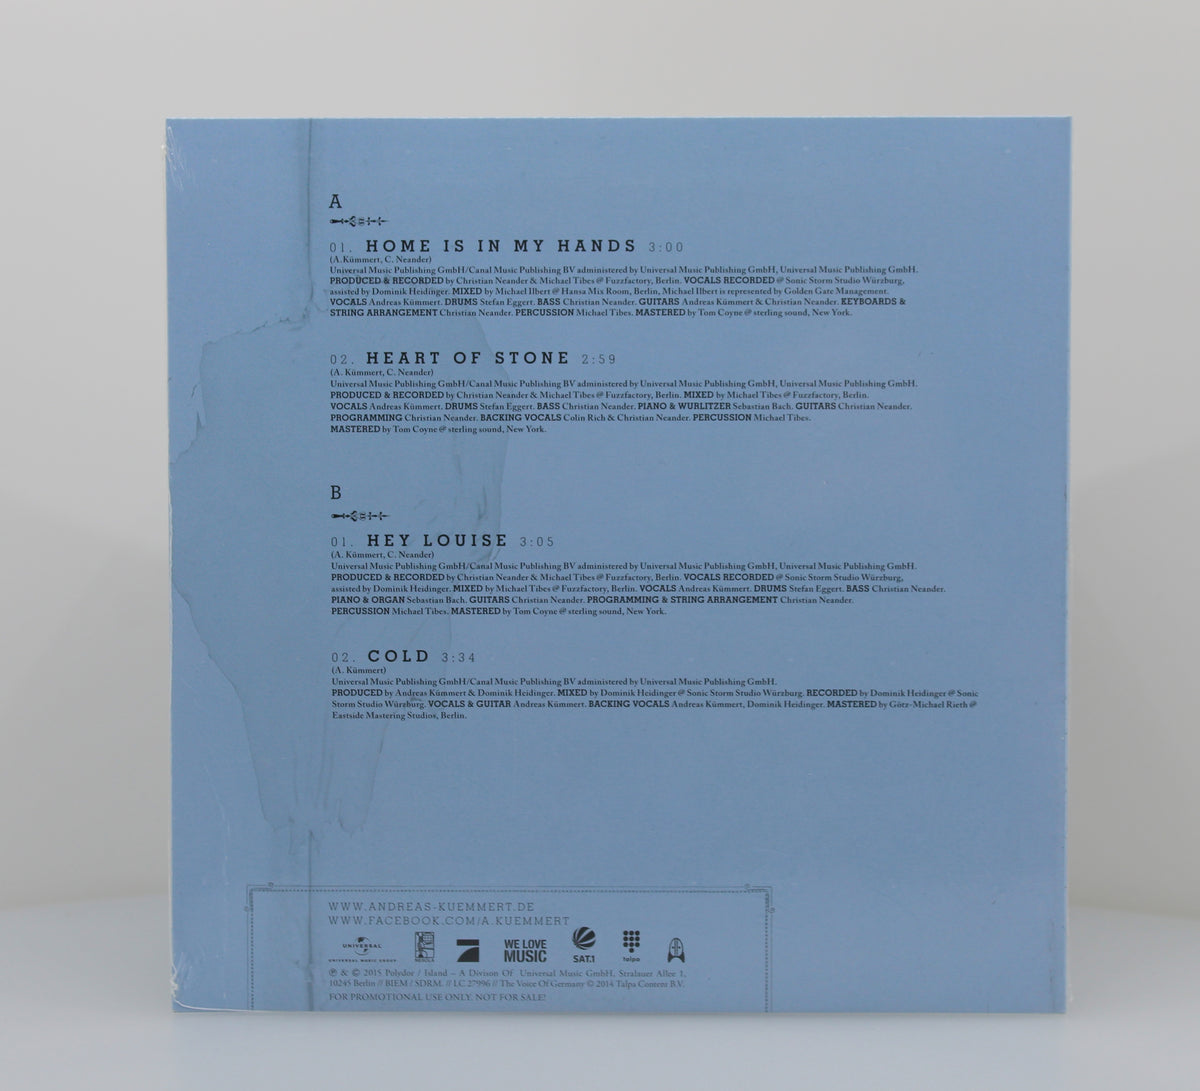 Andreas Kümmert ‎– Here I Am, Vinyl, 7&quot;, 45 RPM, Promo, Germany 2015 (Various diff)